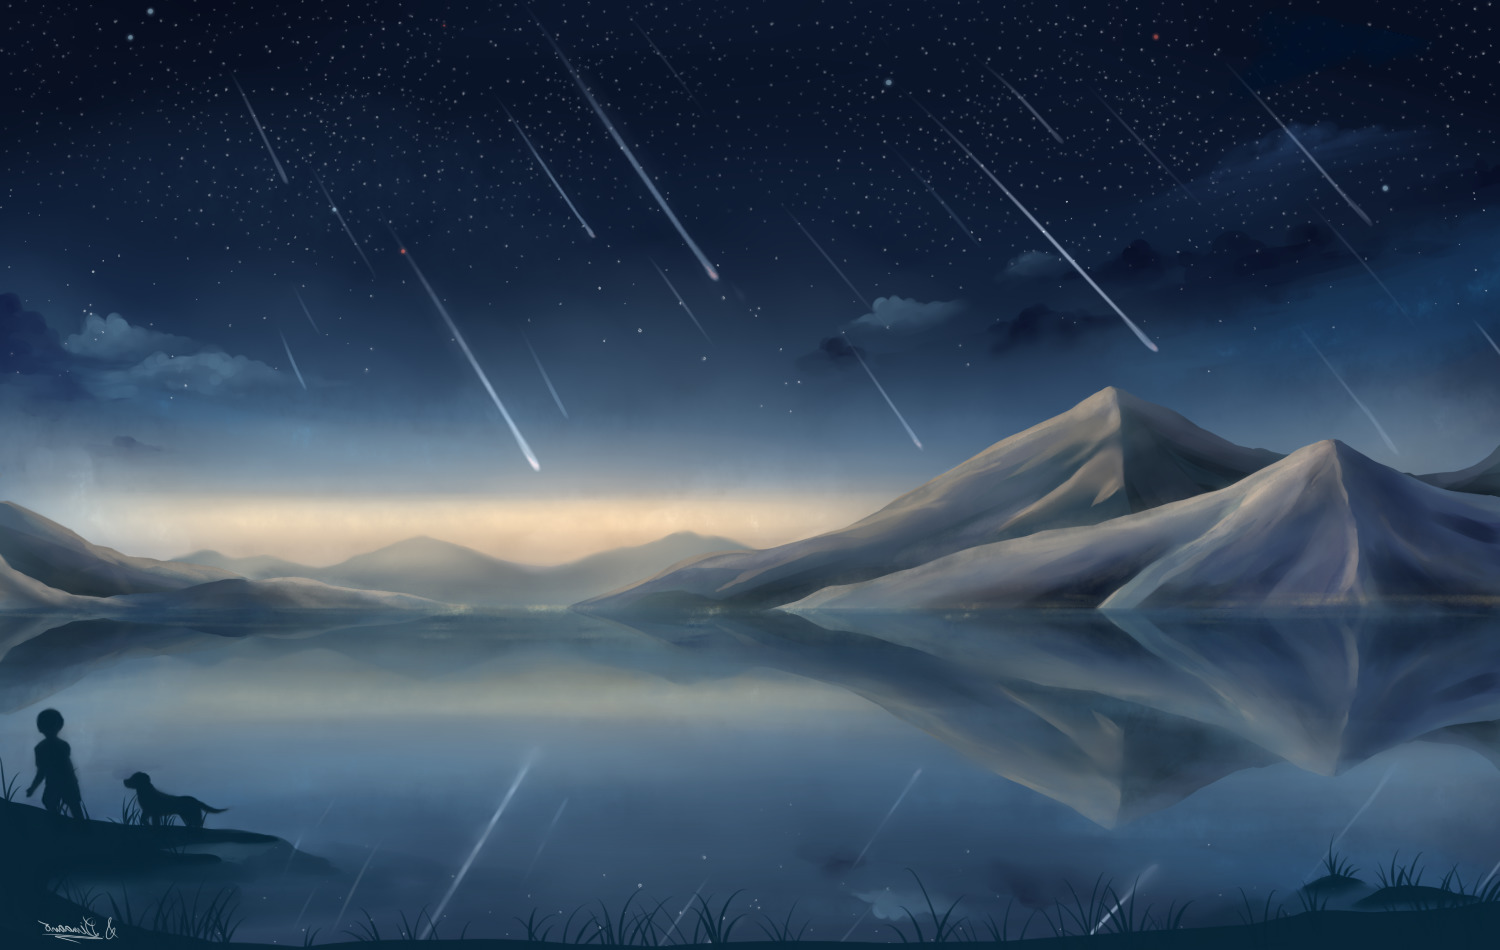 fantasy art concept art artwork meteors mountains lake reflection stars dog Wallpaper